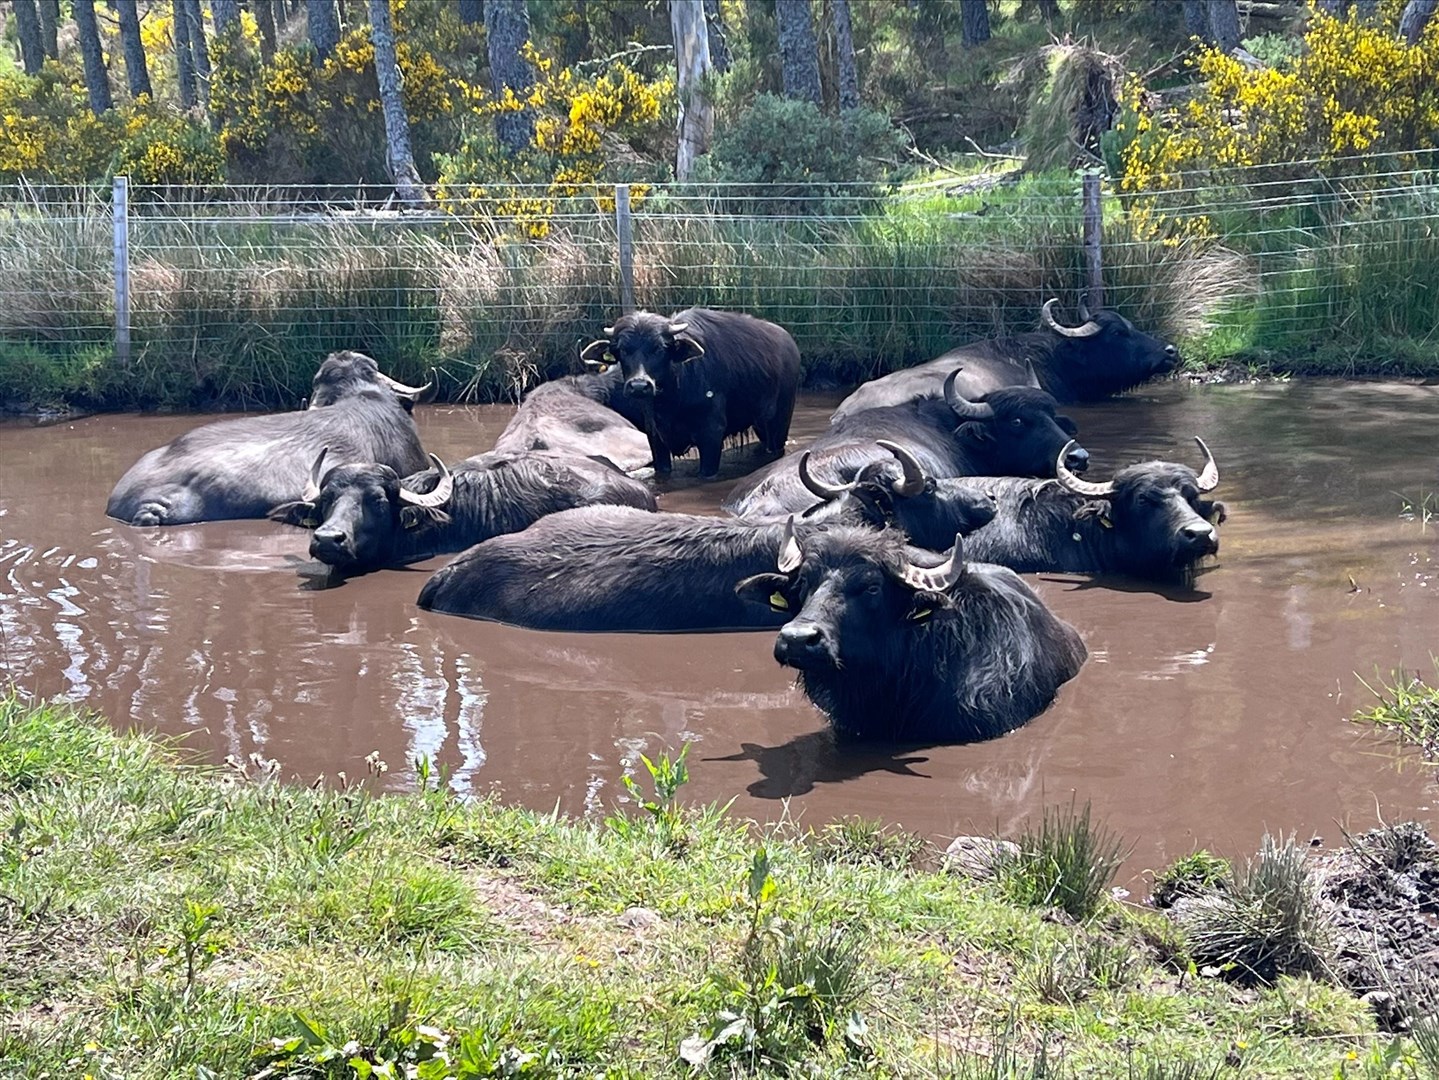 The water buffalo at Thorabella Farm near Duffus.